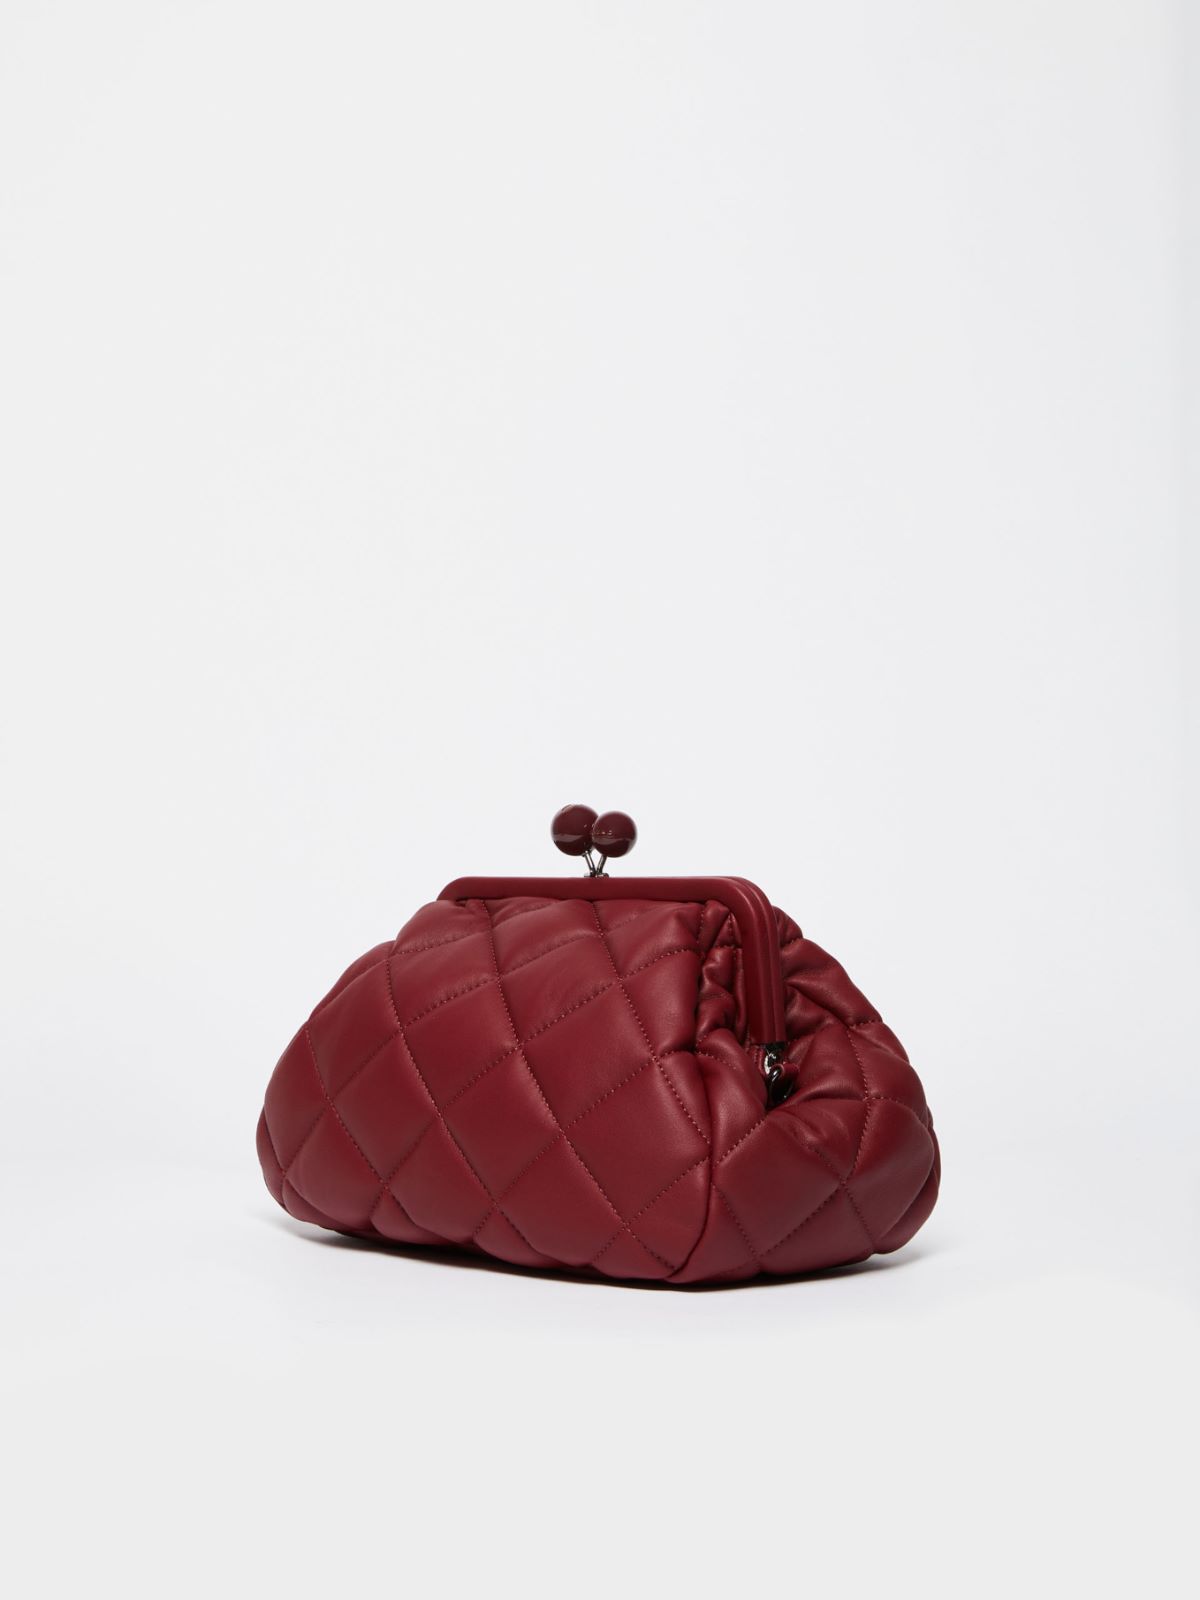 Medium Pasticcino Bag in nappa leather - BORDEAUX - Weekend Max Mara - 2